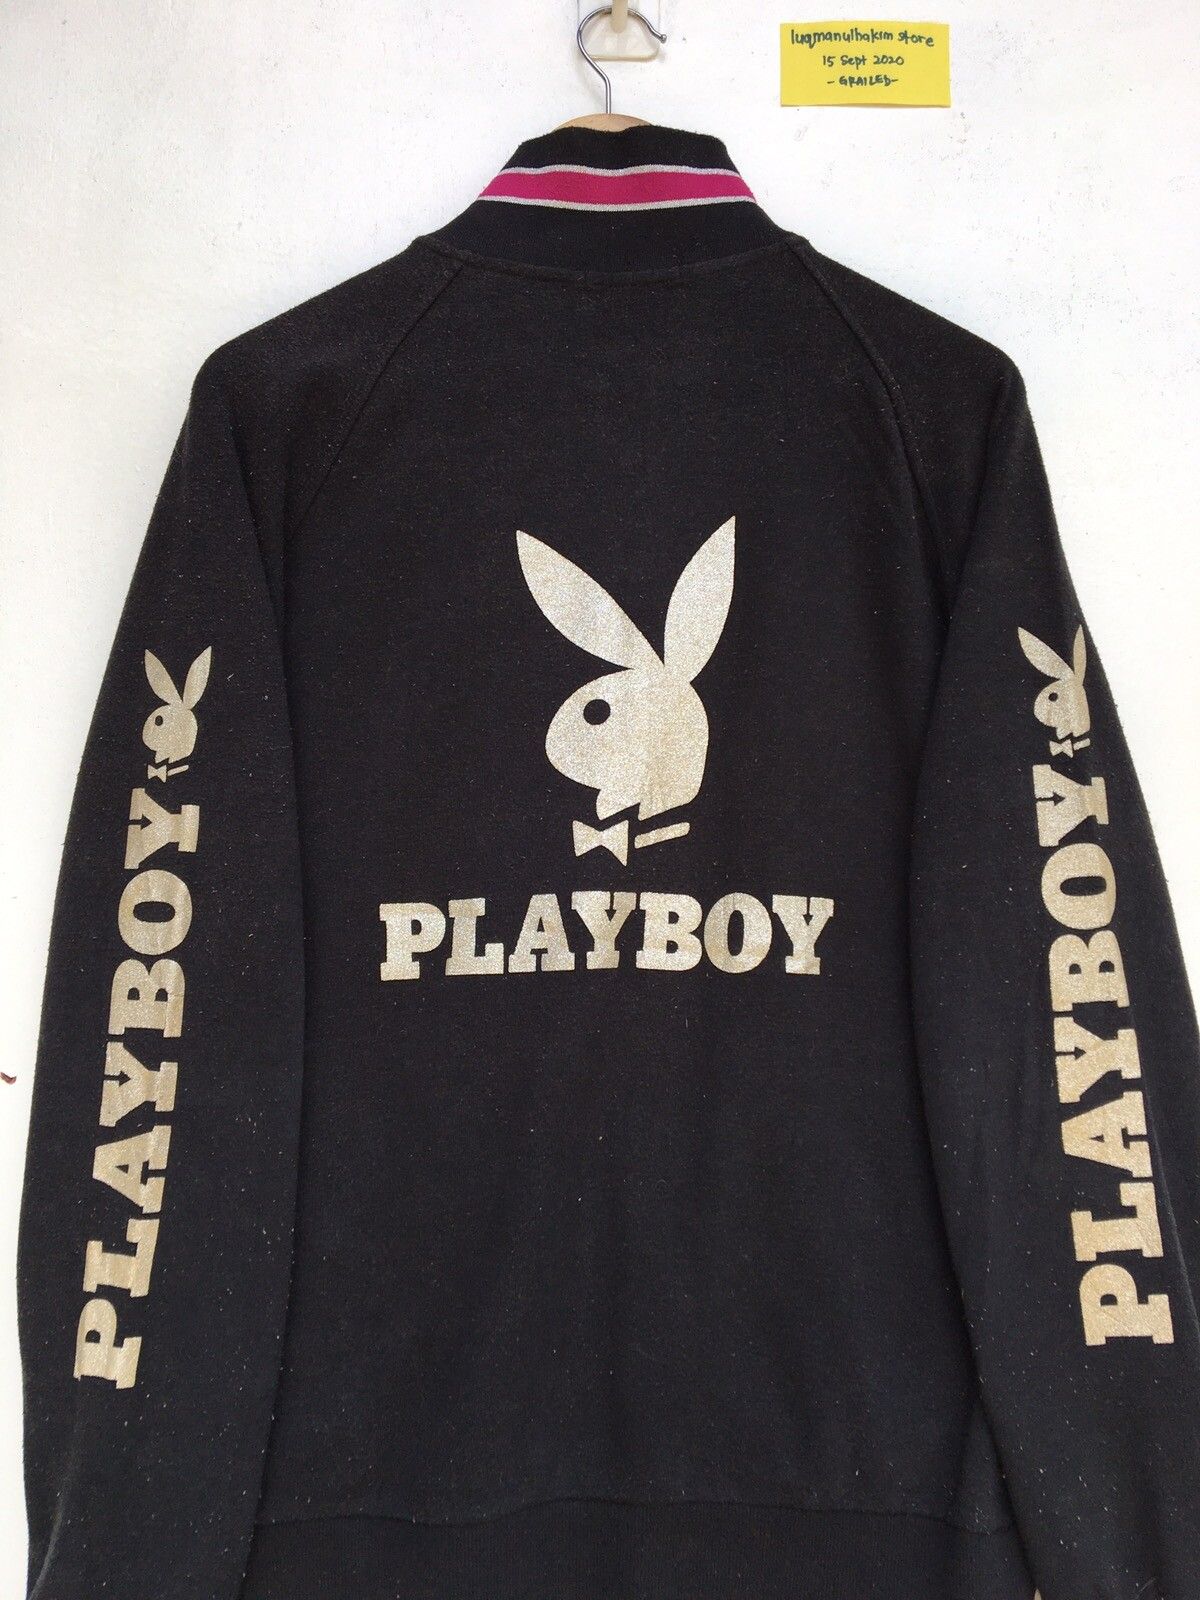 Vintage Rare Playboy Big Logo Spellout Zip Up Sweater Size US L / EU 52-54 / 3 - 1 Preview